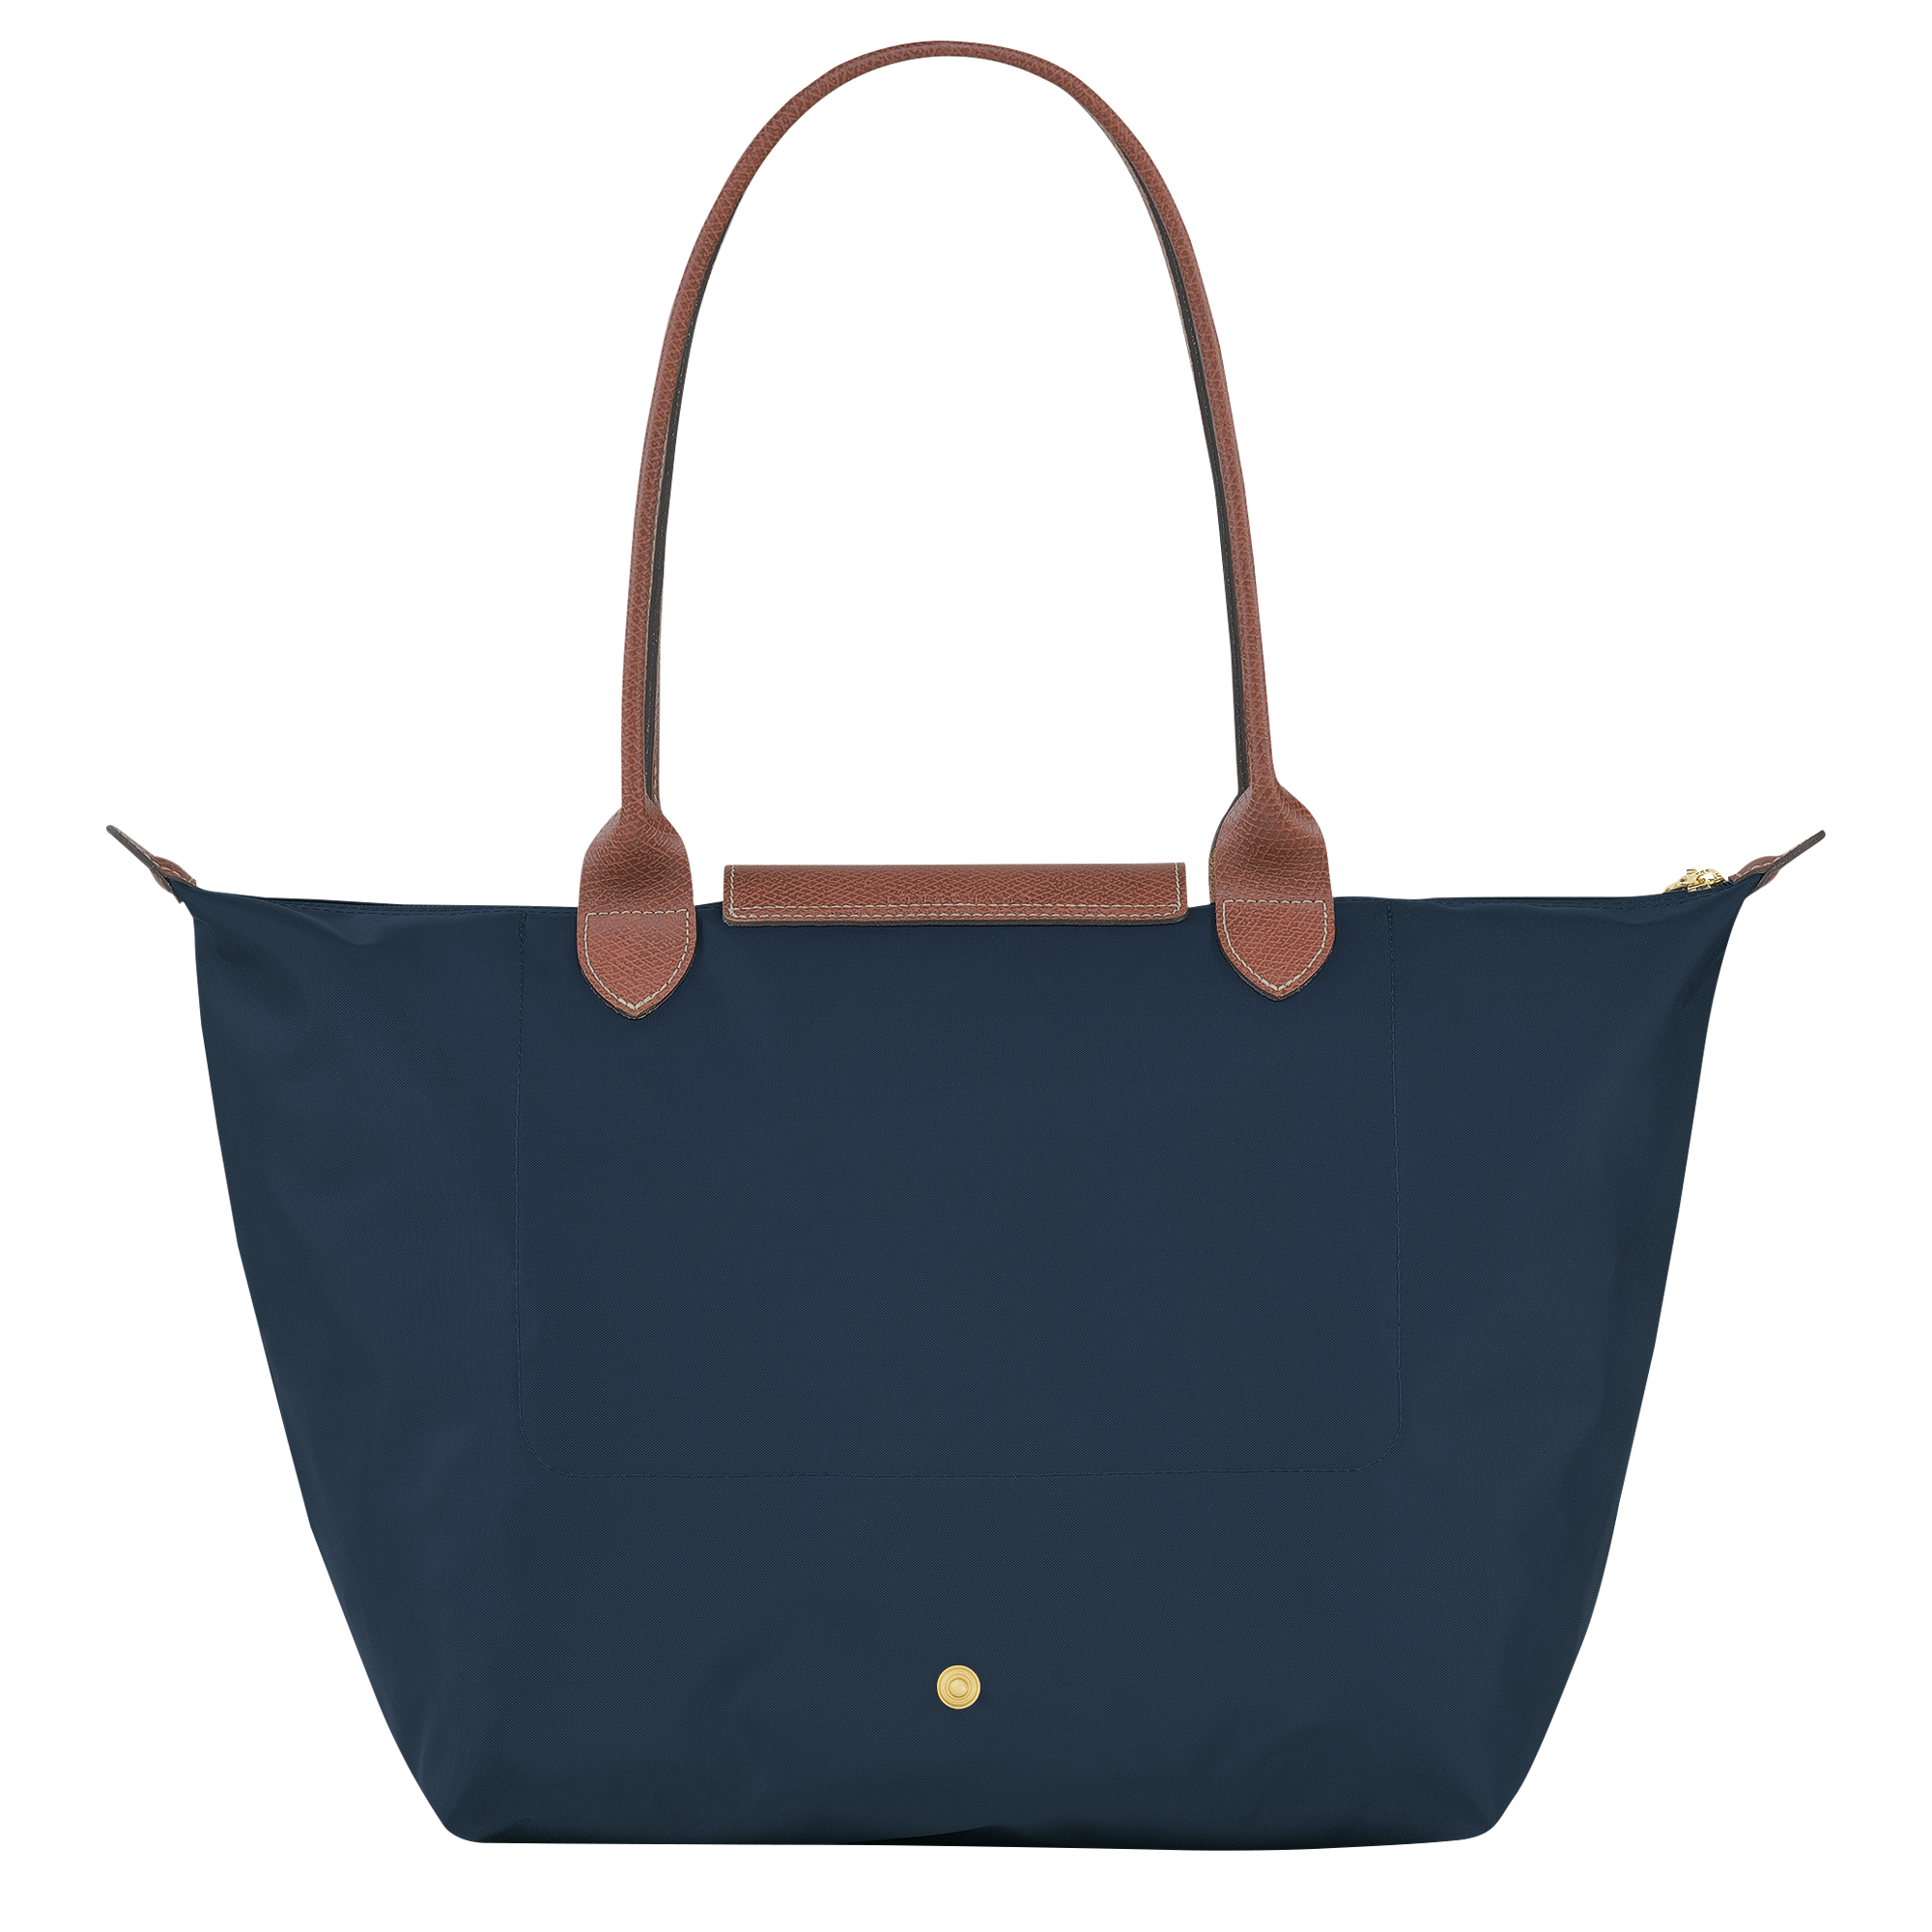 Bags & Purses Luggage & Travel Overnight Bags shoulder worn Glacier blue handbag 